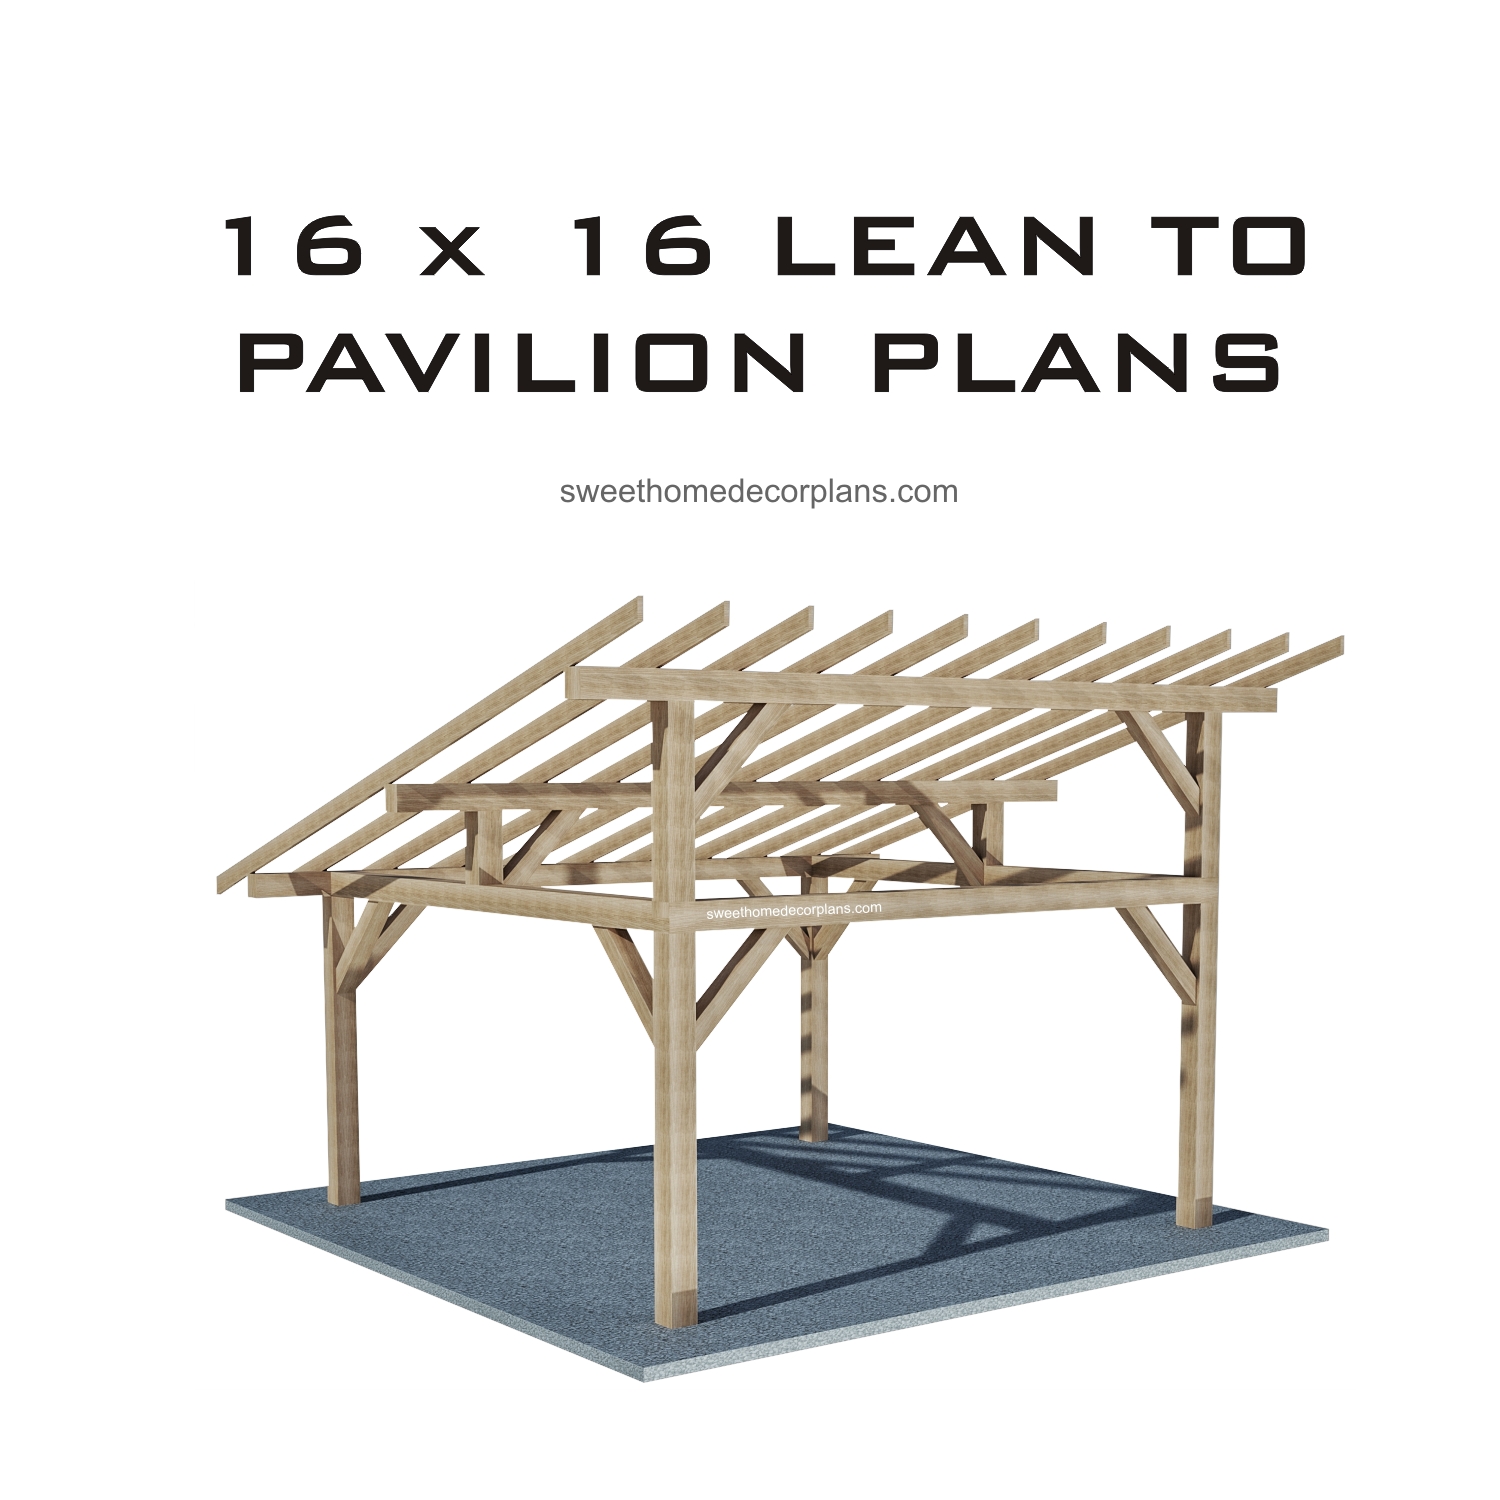 Diy-16-x-16-lean-to-pavilion-plans-gazebo-plans-carport-in-pdf-for-outdoor